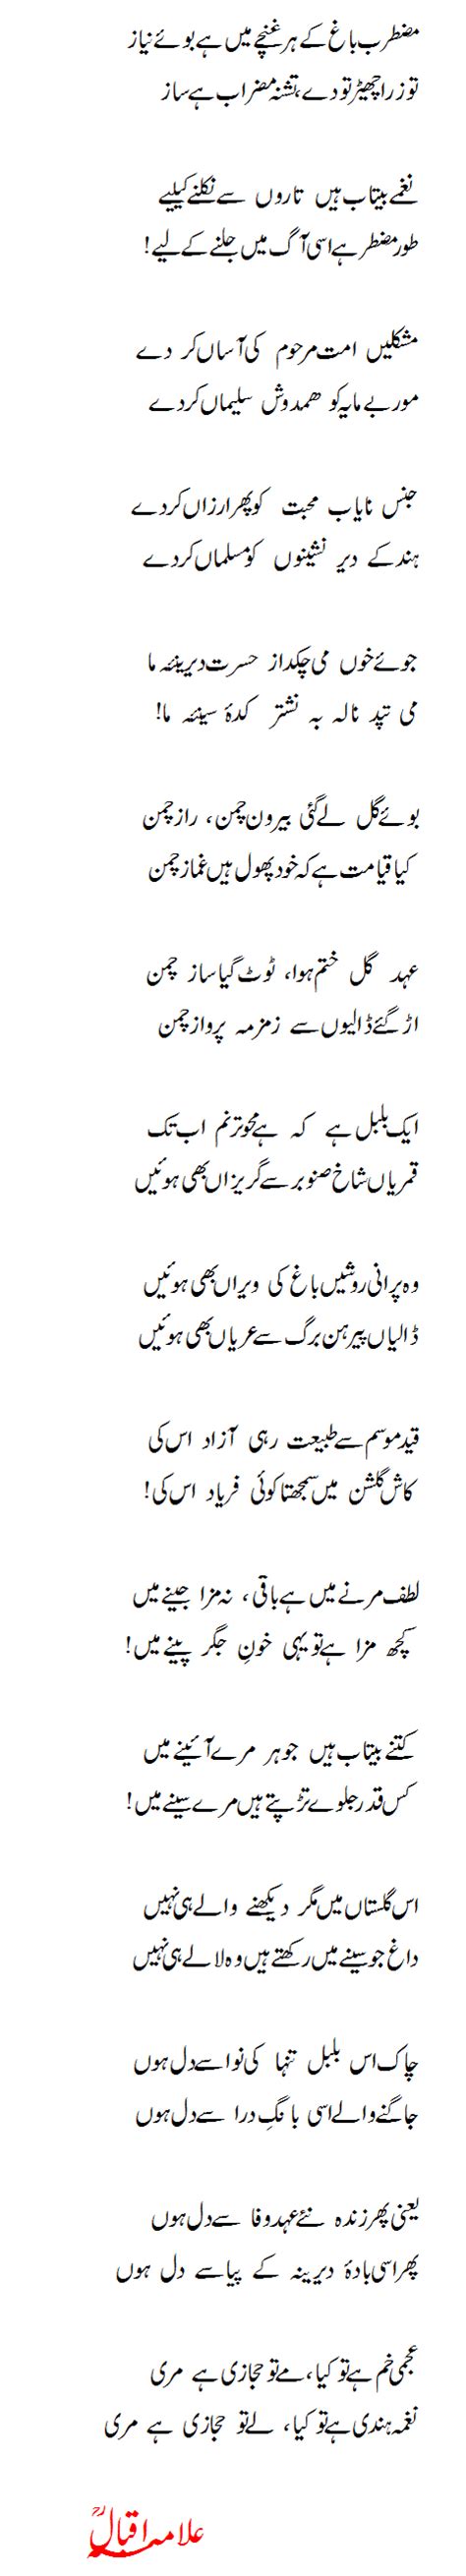 Allama Iqbal Shikwa Poem Ebook